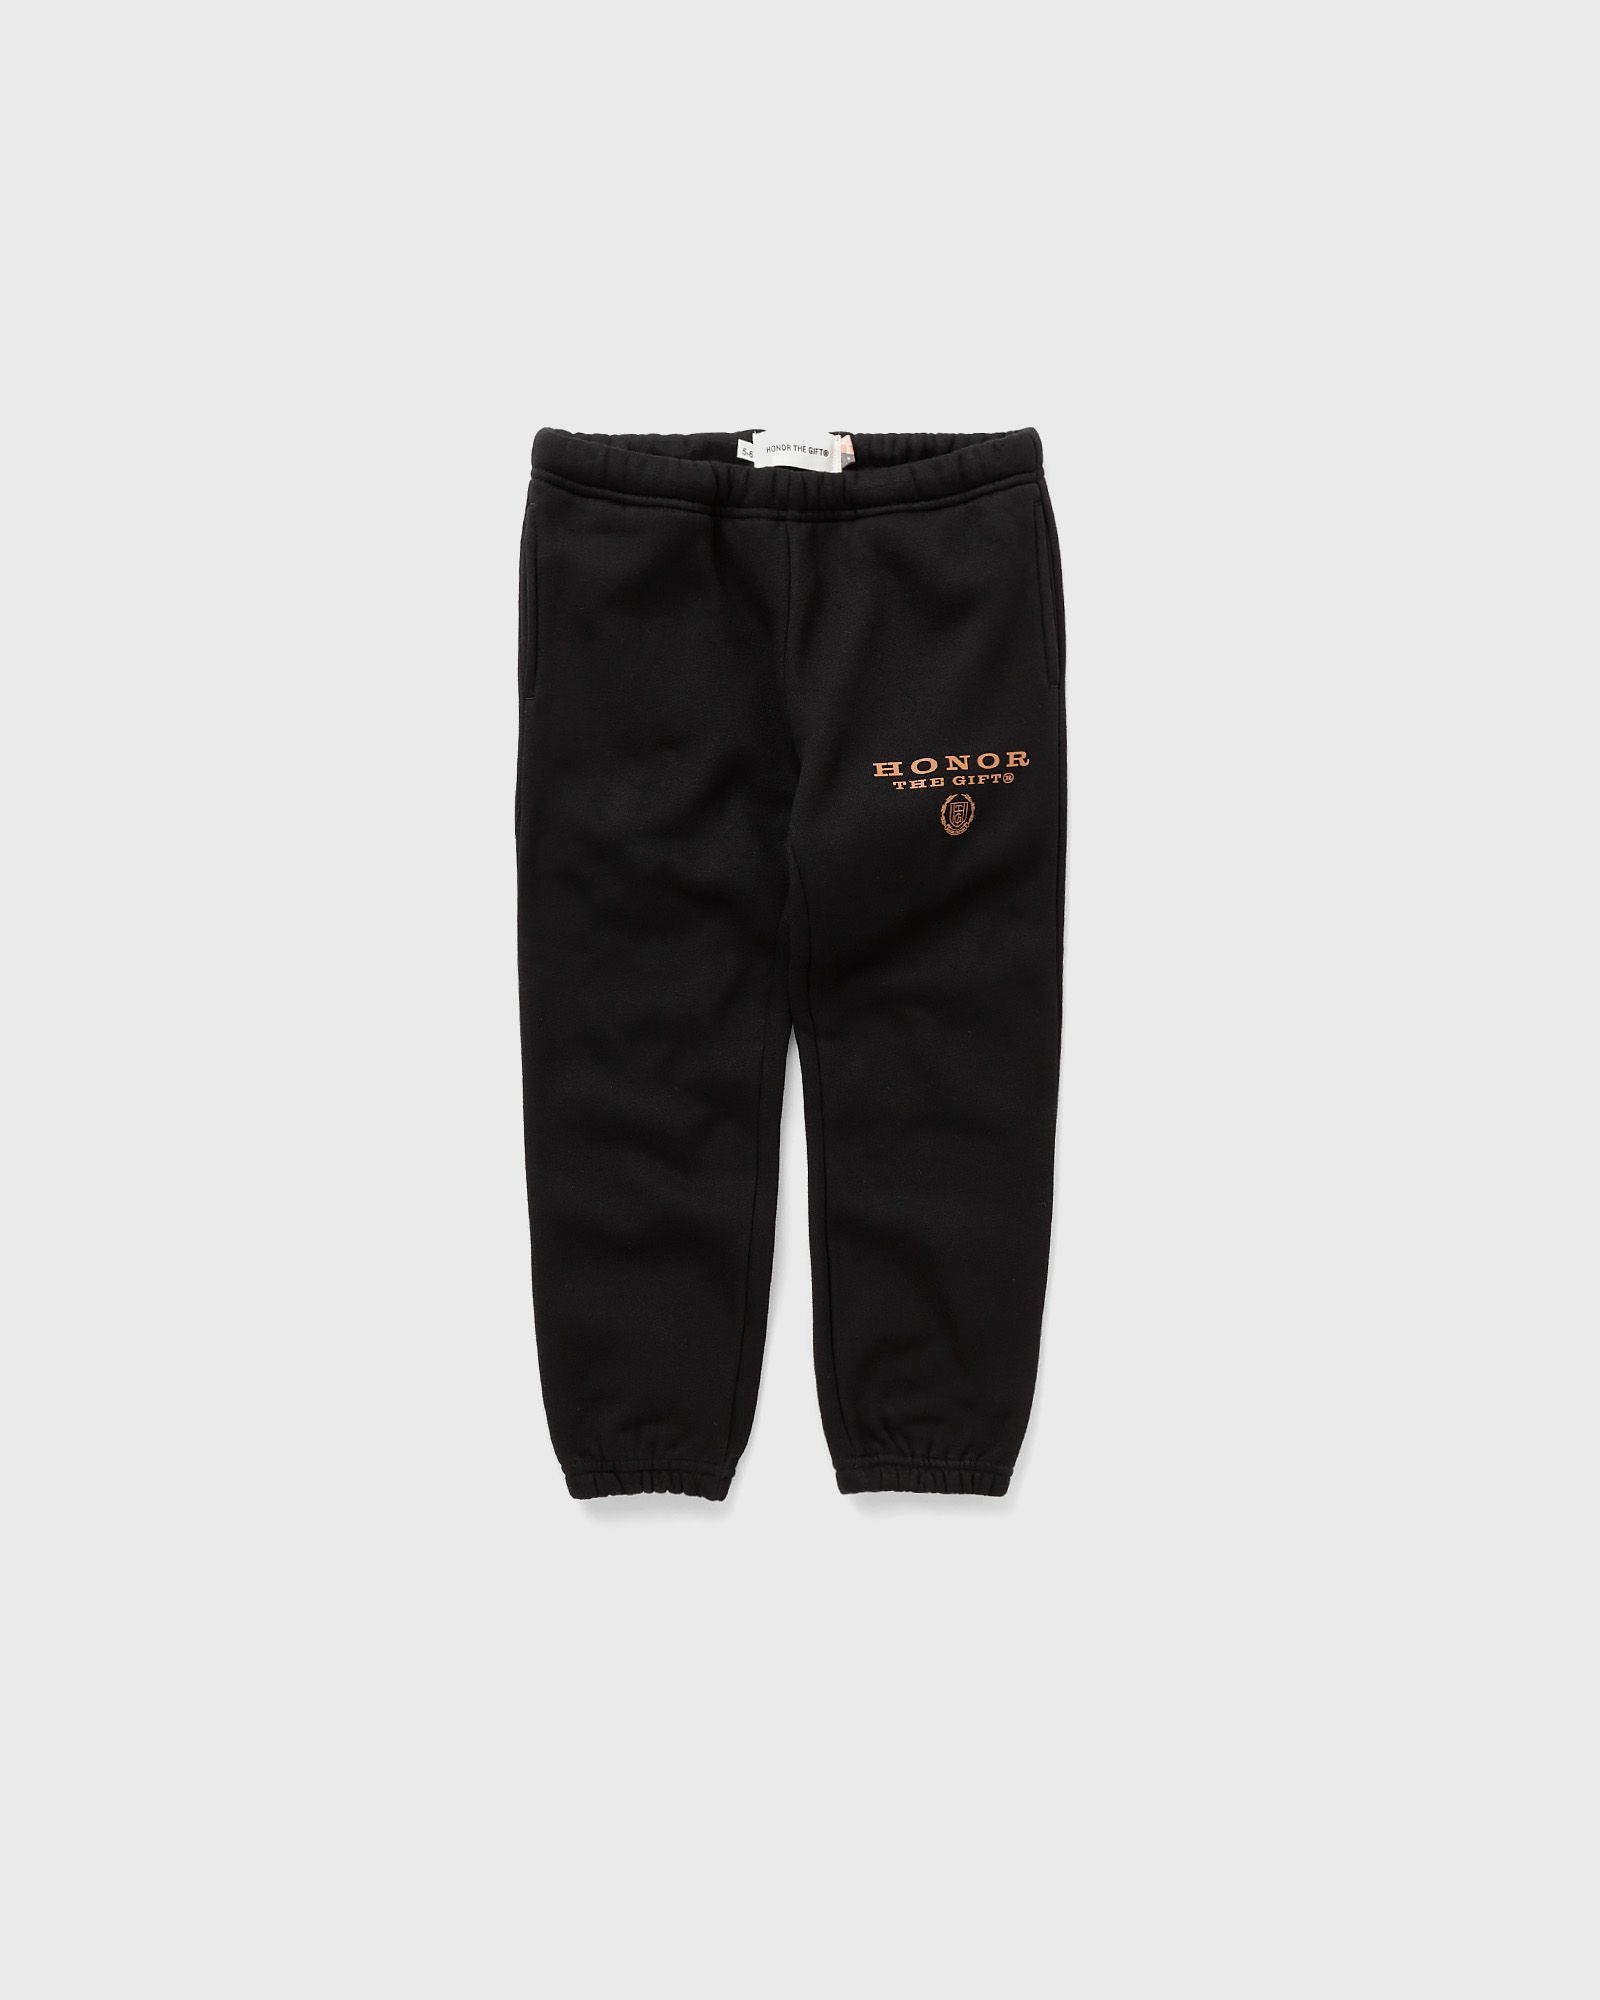 Honor The Gift - sweatpant  pants black in größe:age 2-4 | eu 92-104